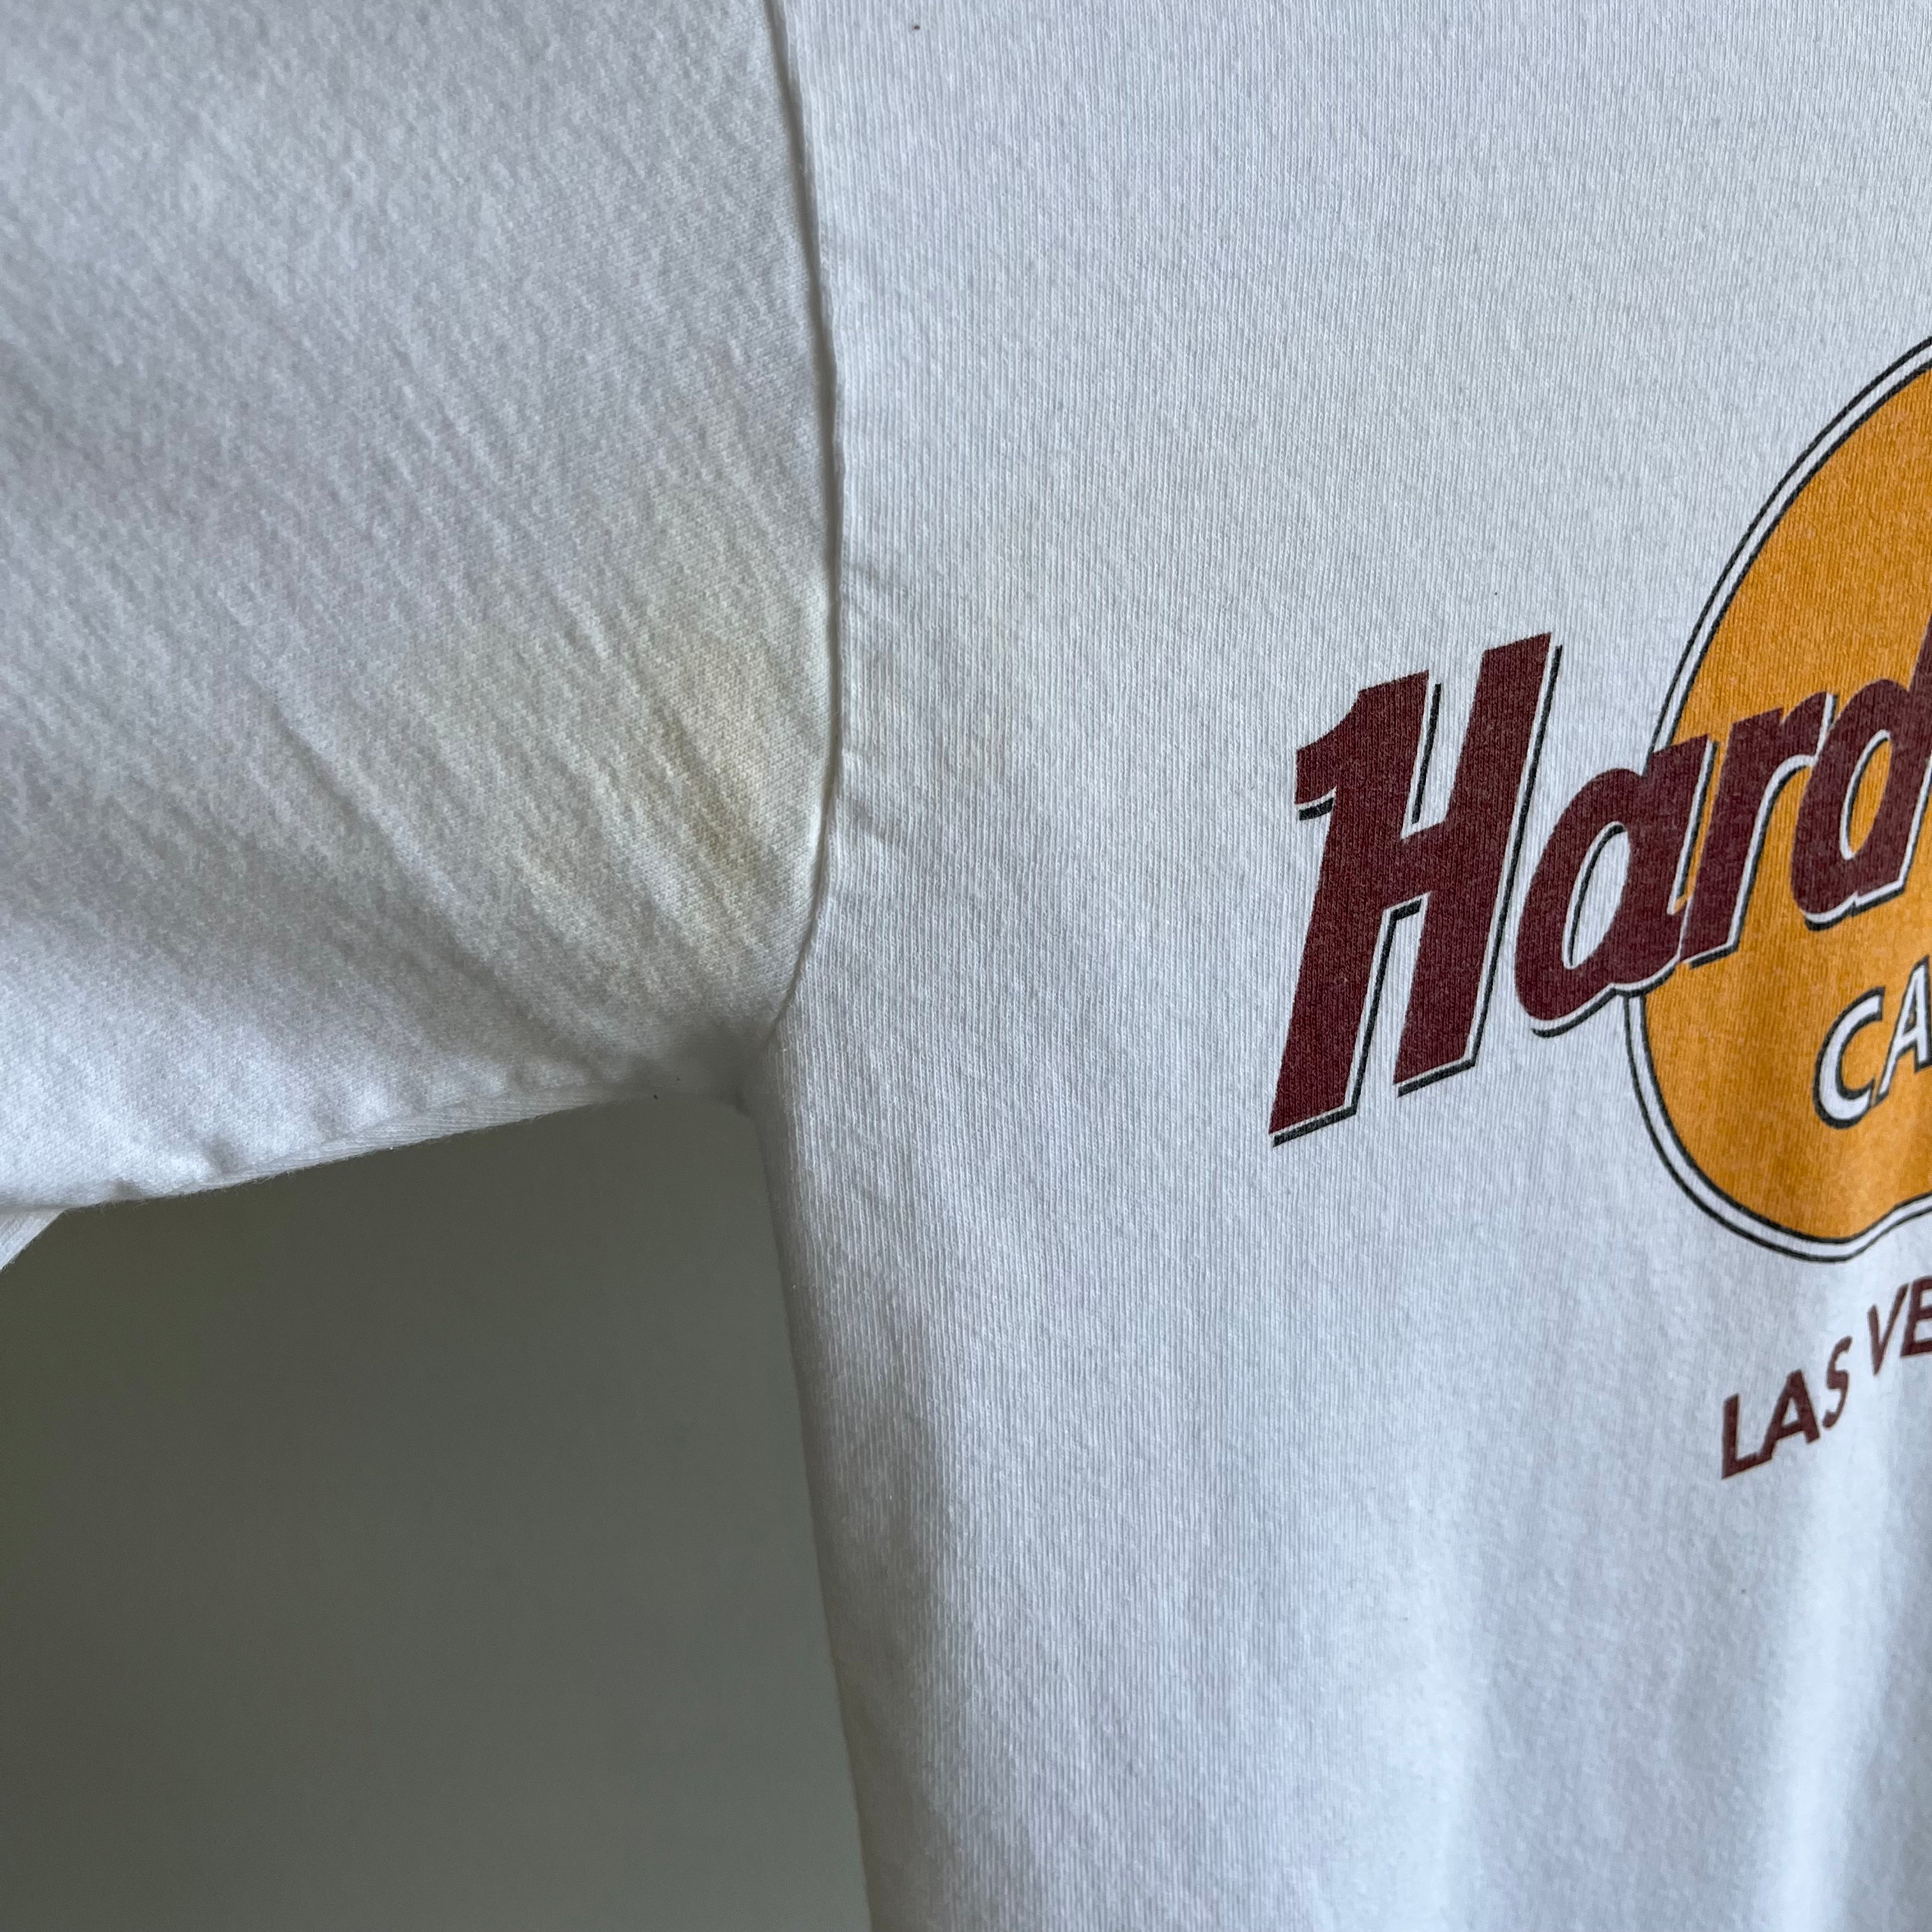 1980s Hard Rock Cafe Las Vegas T-Shirt